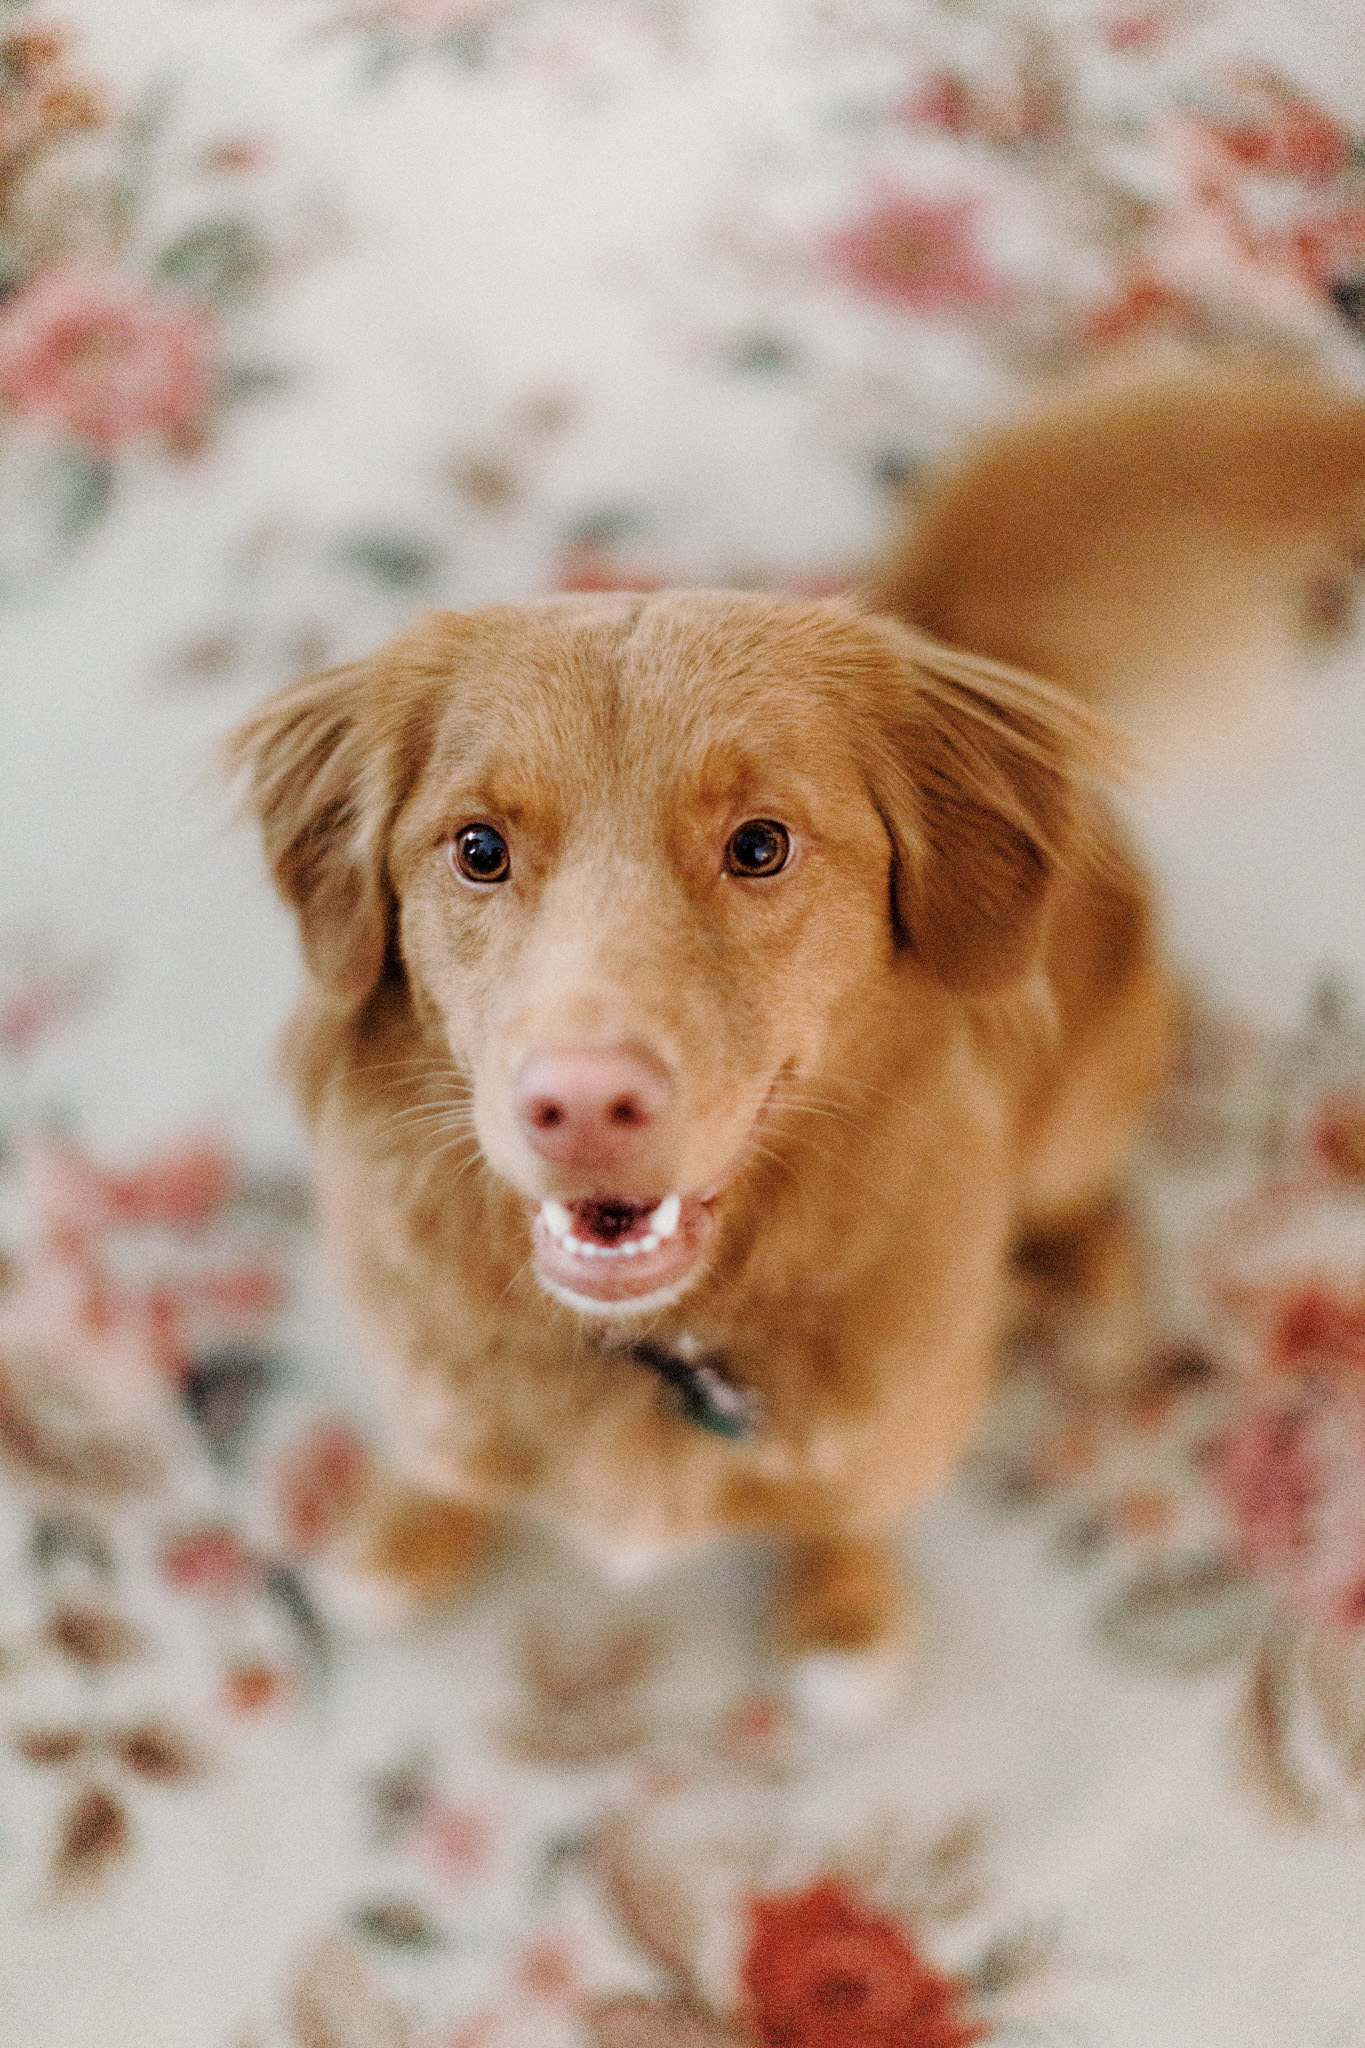 An auburn dog smiles at the wedding photographers camera